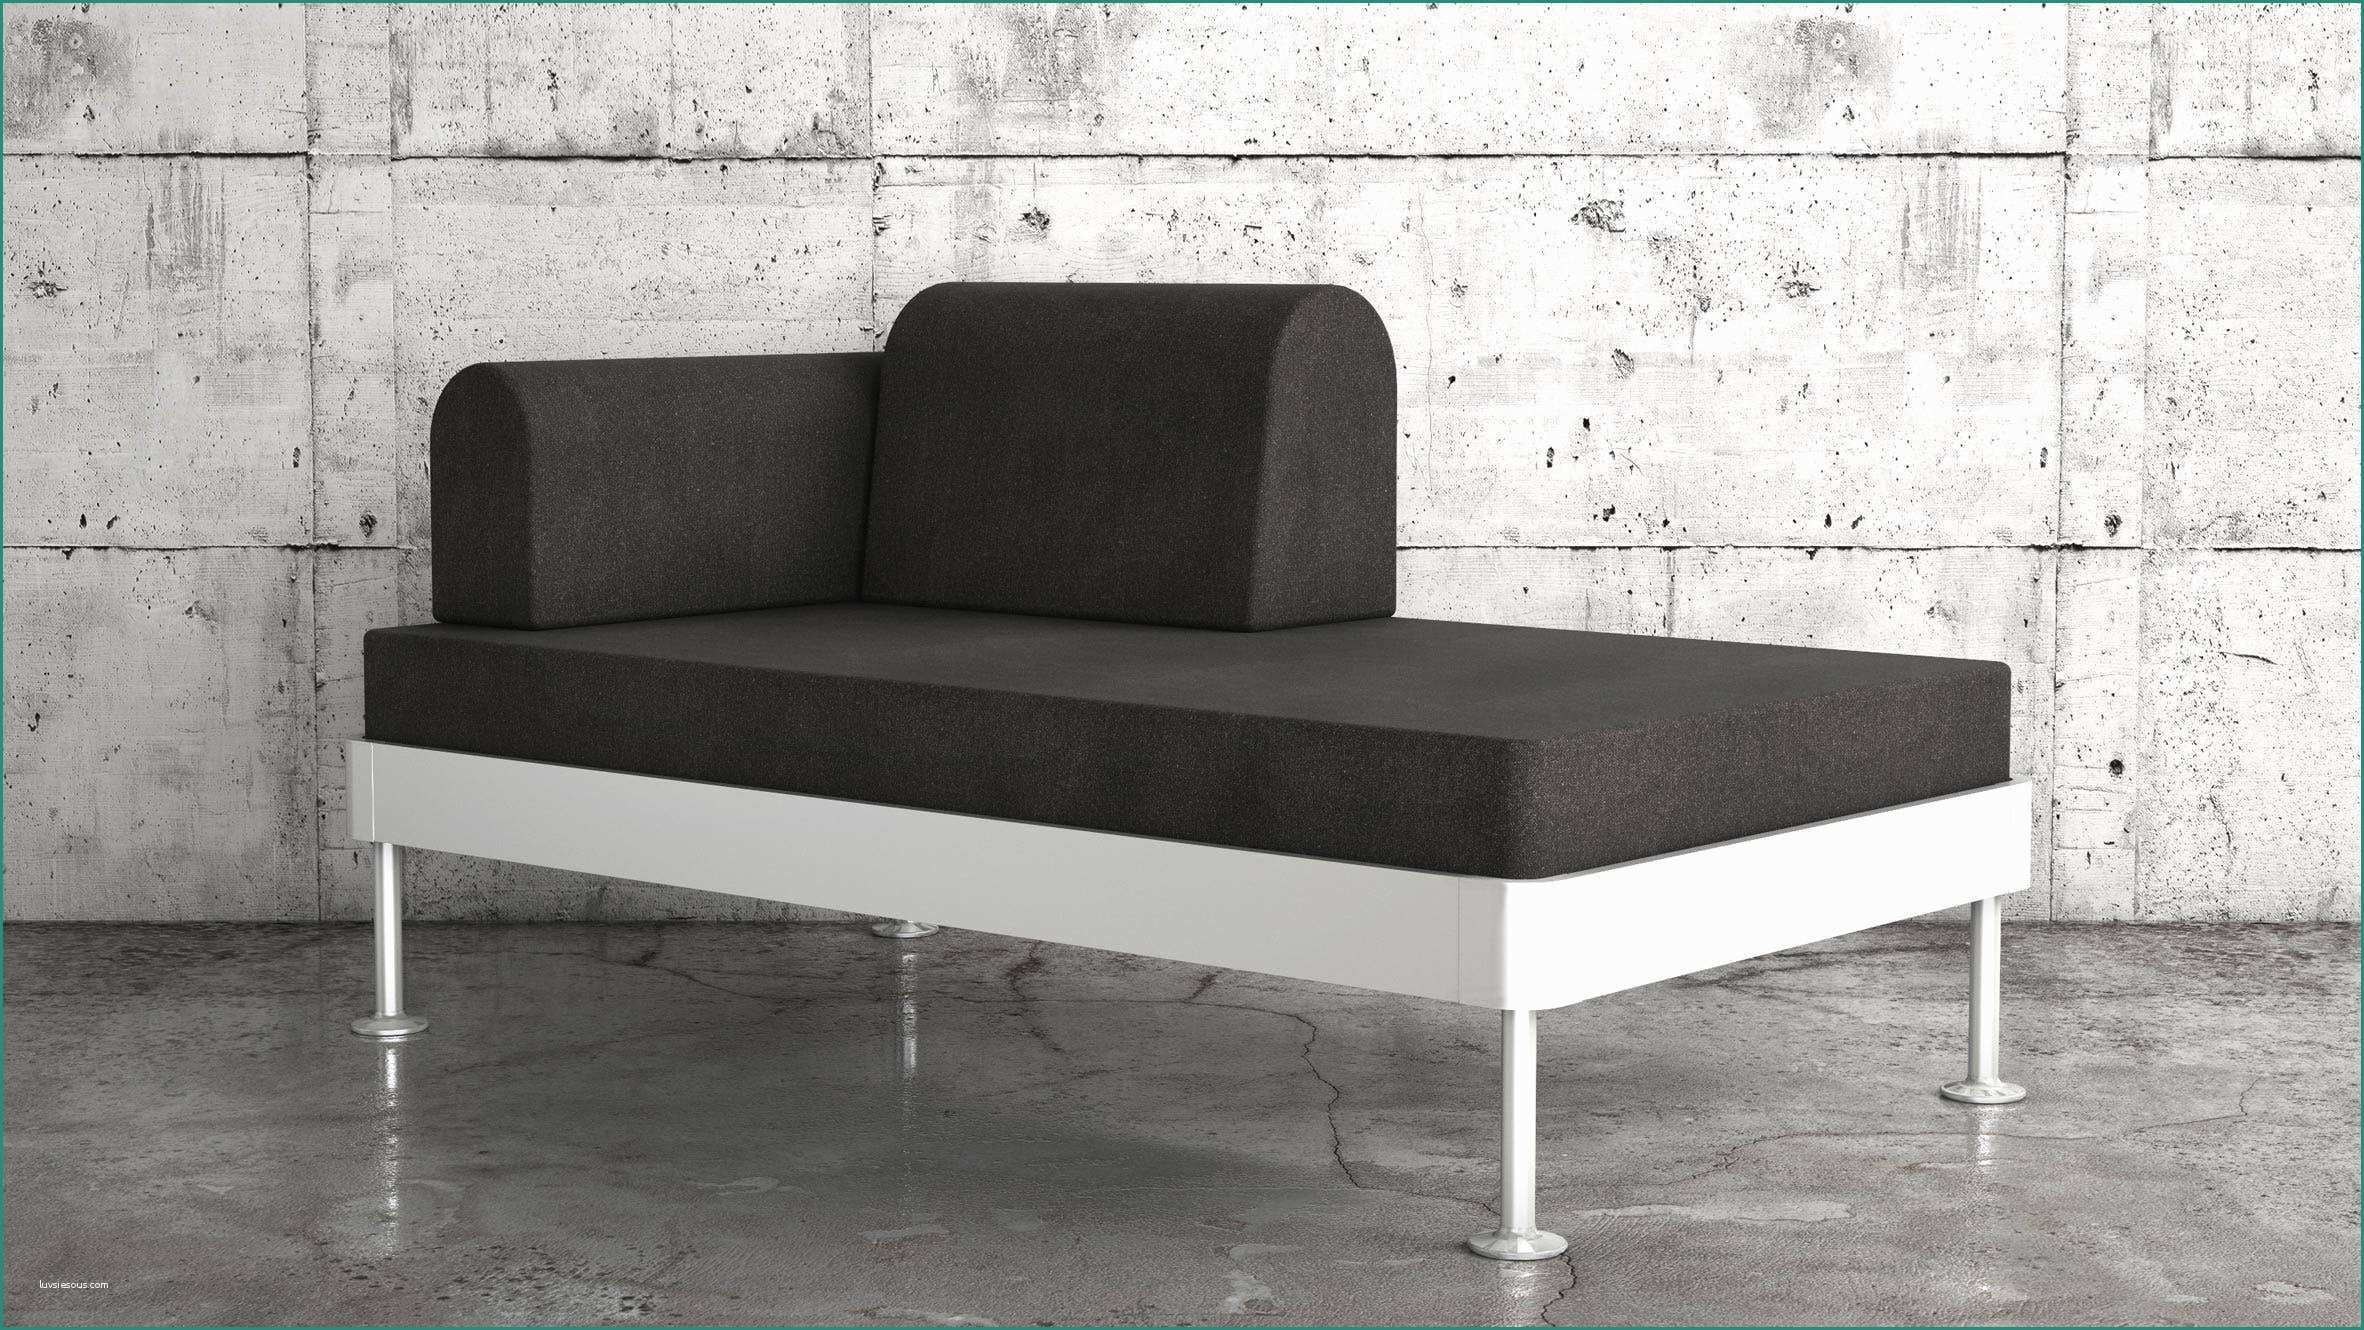 Sedie In Metallo E Se Living Panton Chair Design Sedia Simil Panton Da Esterno Ed